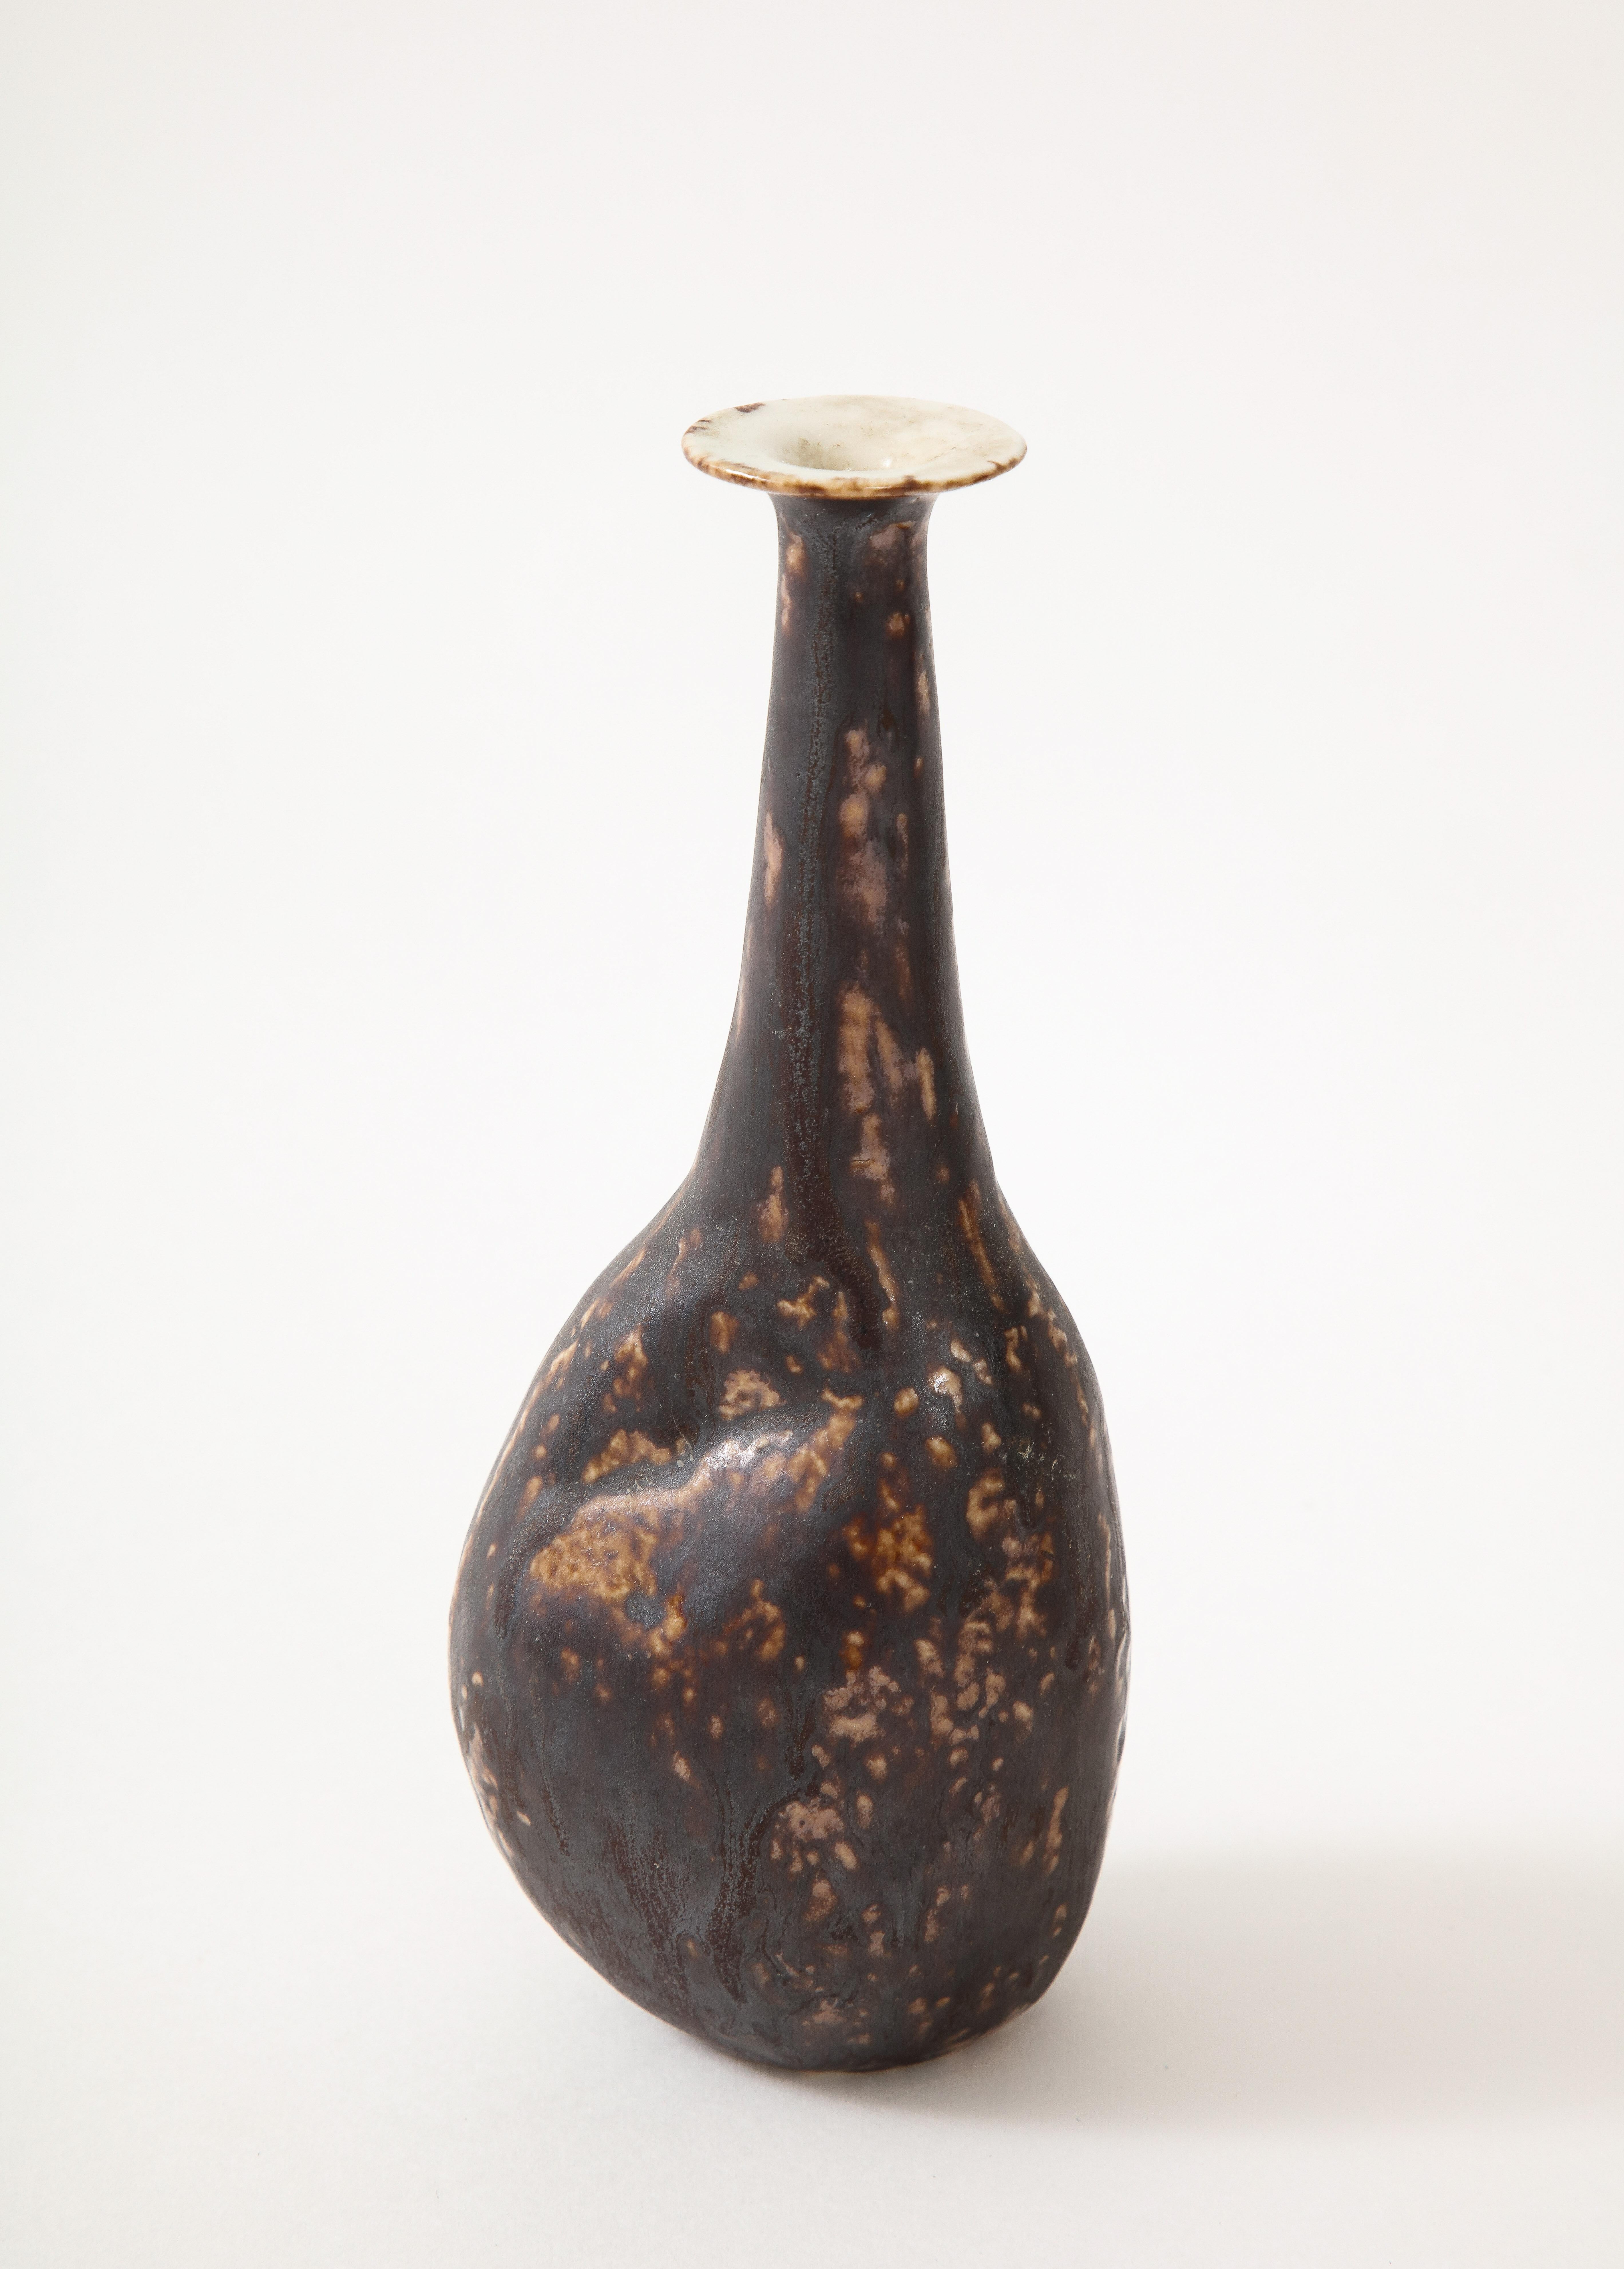 Bruno Gambone Set of Three Small Ceramic or Stoneware Vases, Italy, 1970s For Sale 3